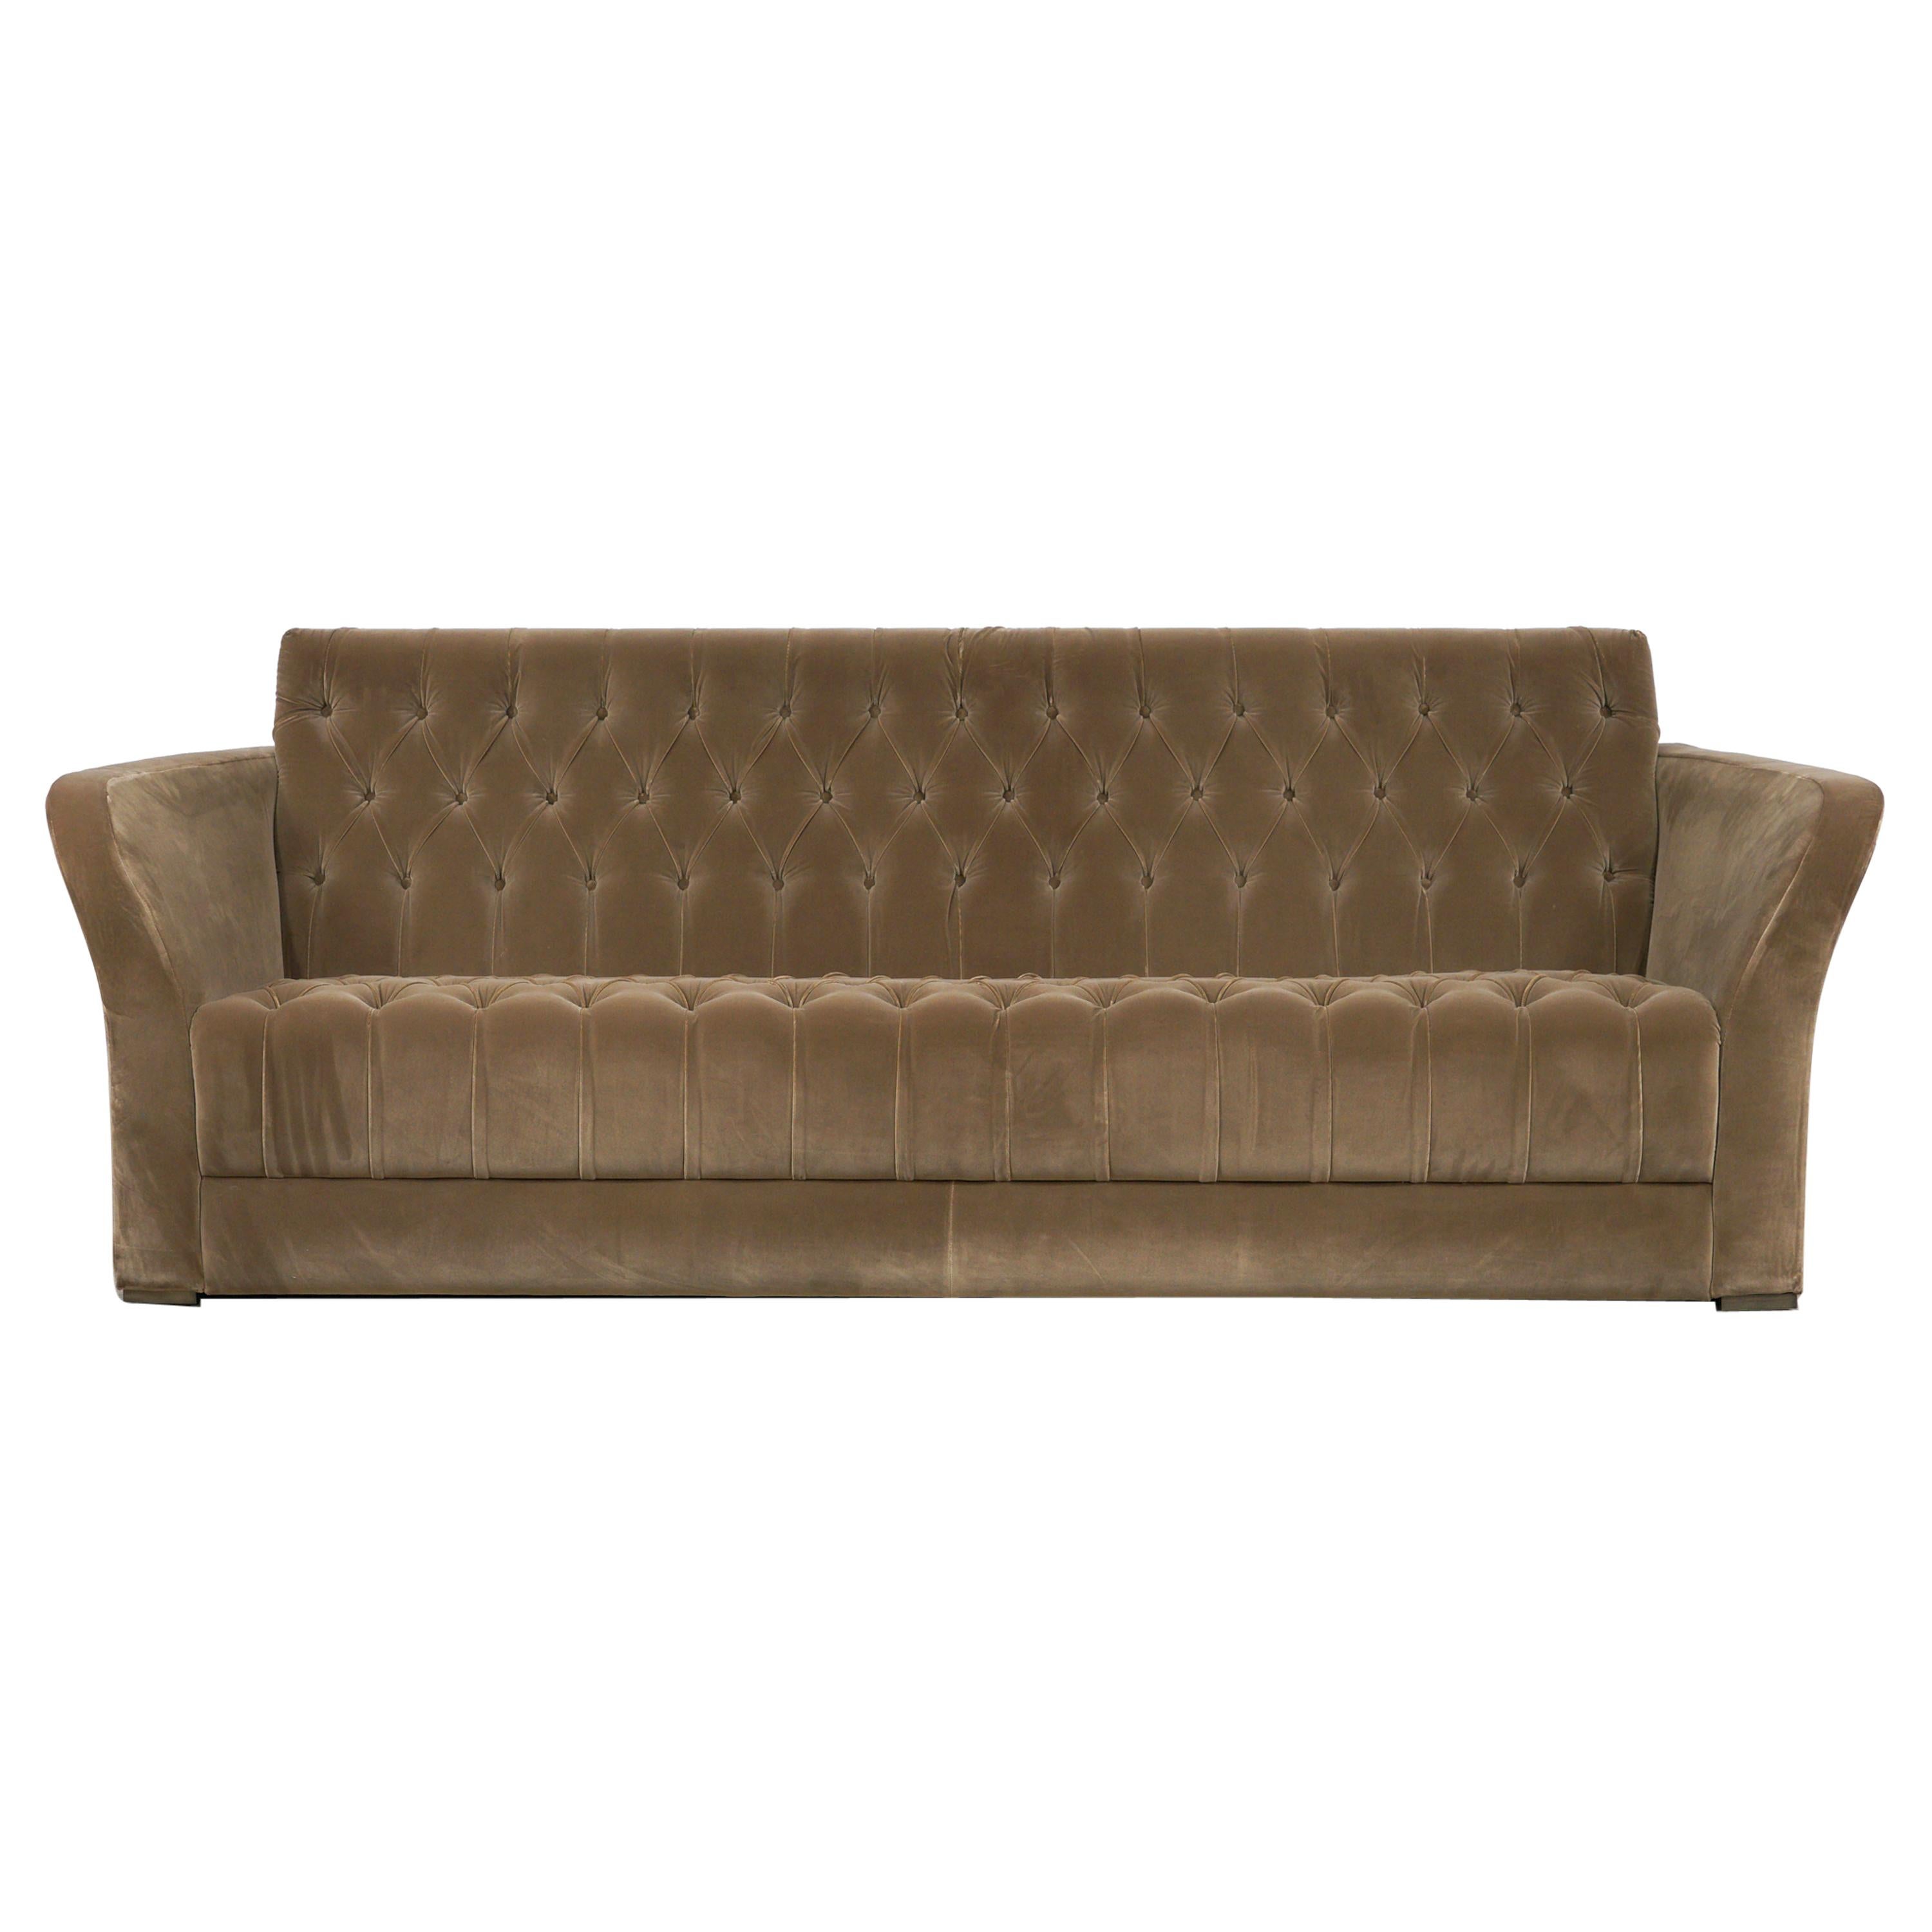 Heritage Collection Rivoli 3-Seat Sofa For Sale